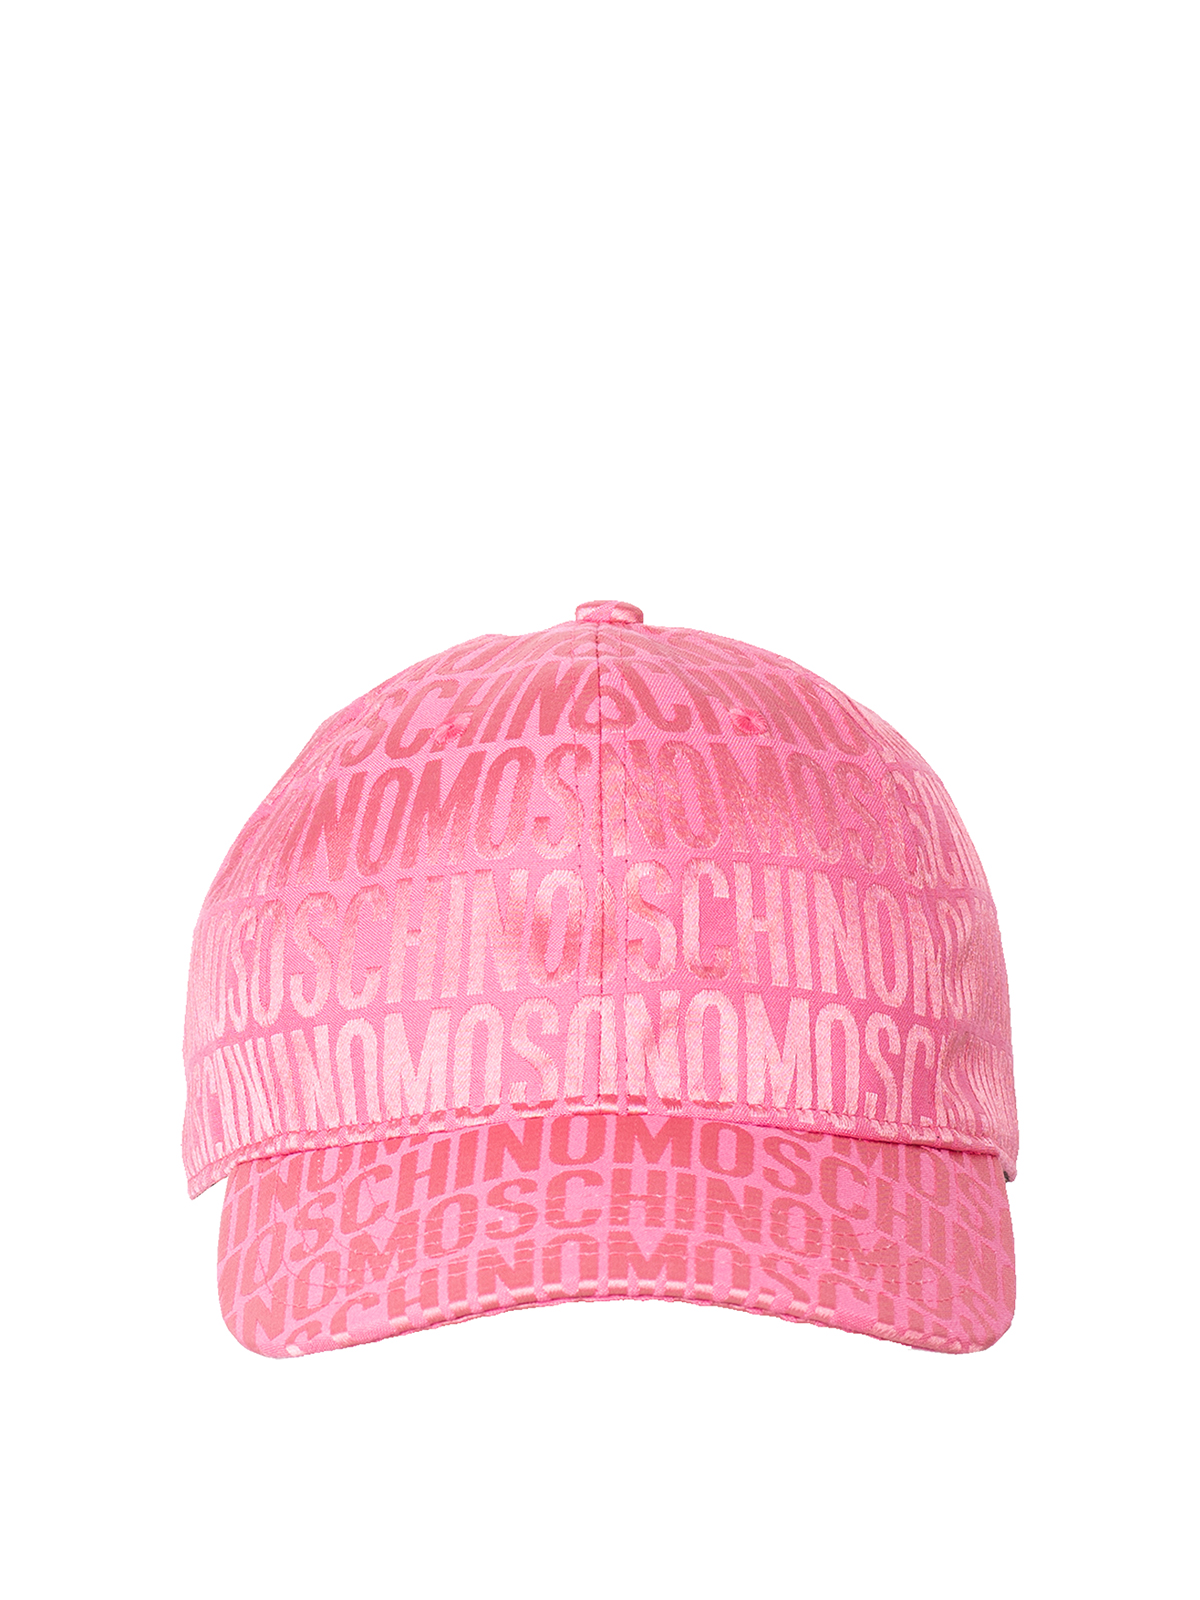 Moschino Pink Logo Baseball Hat